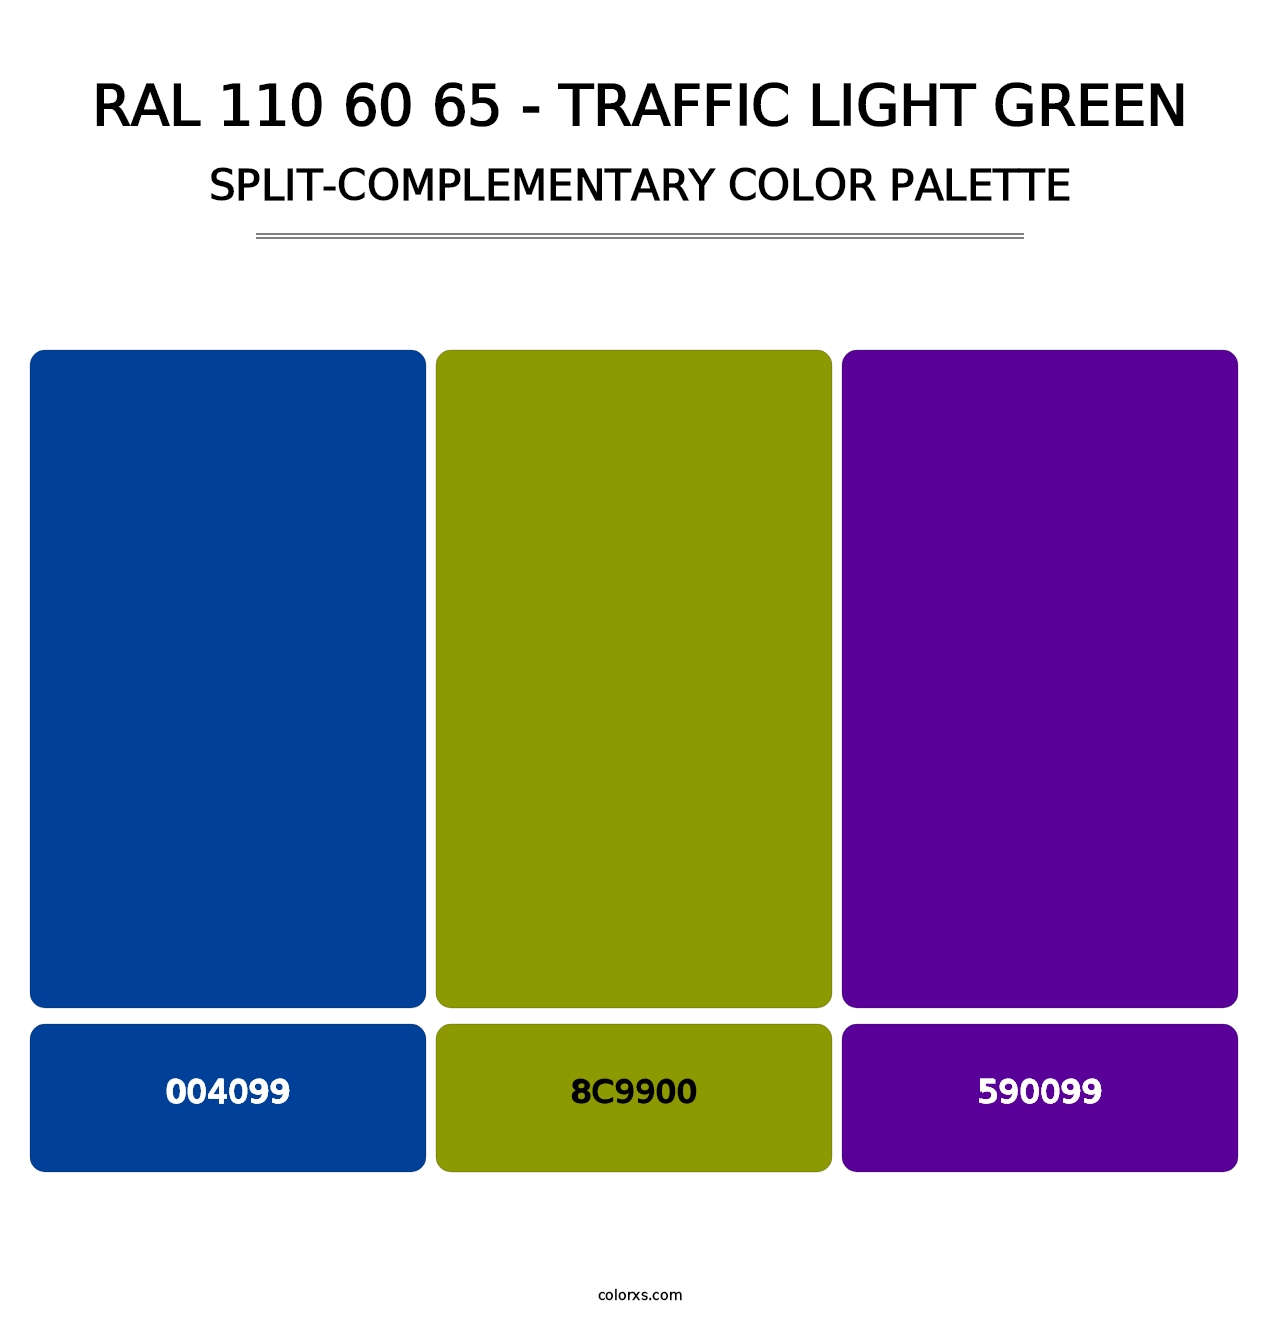 RAL 110 60 65 - Traffic Light Green - Split-Complementary Color Palette